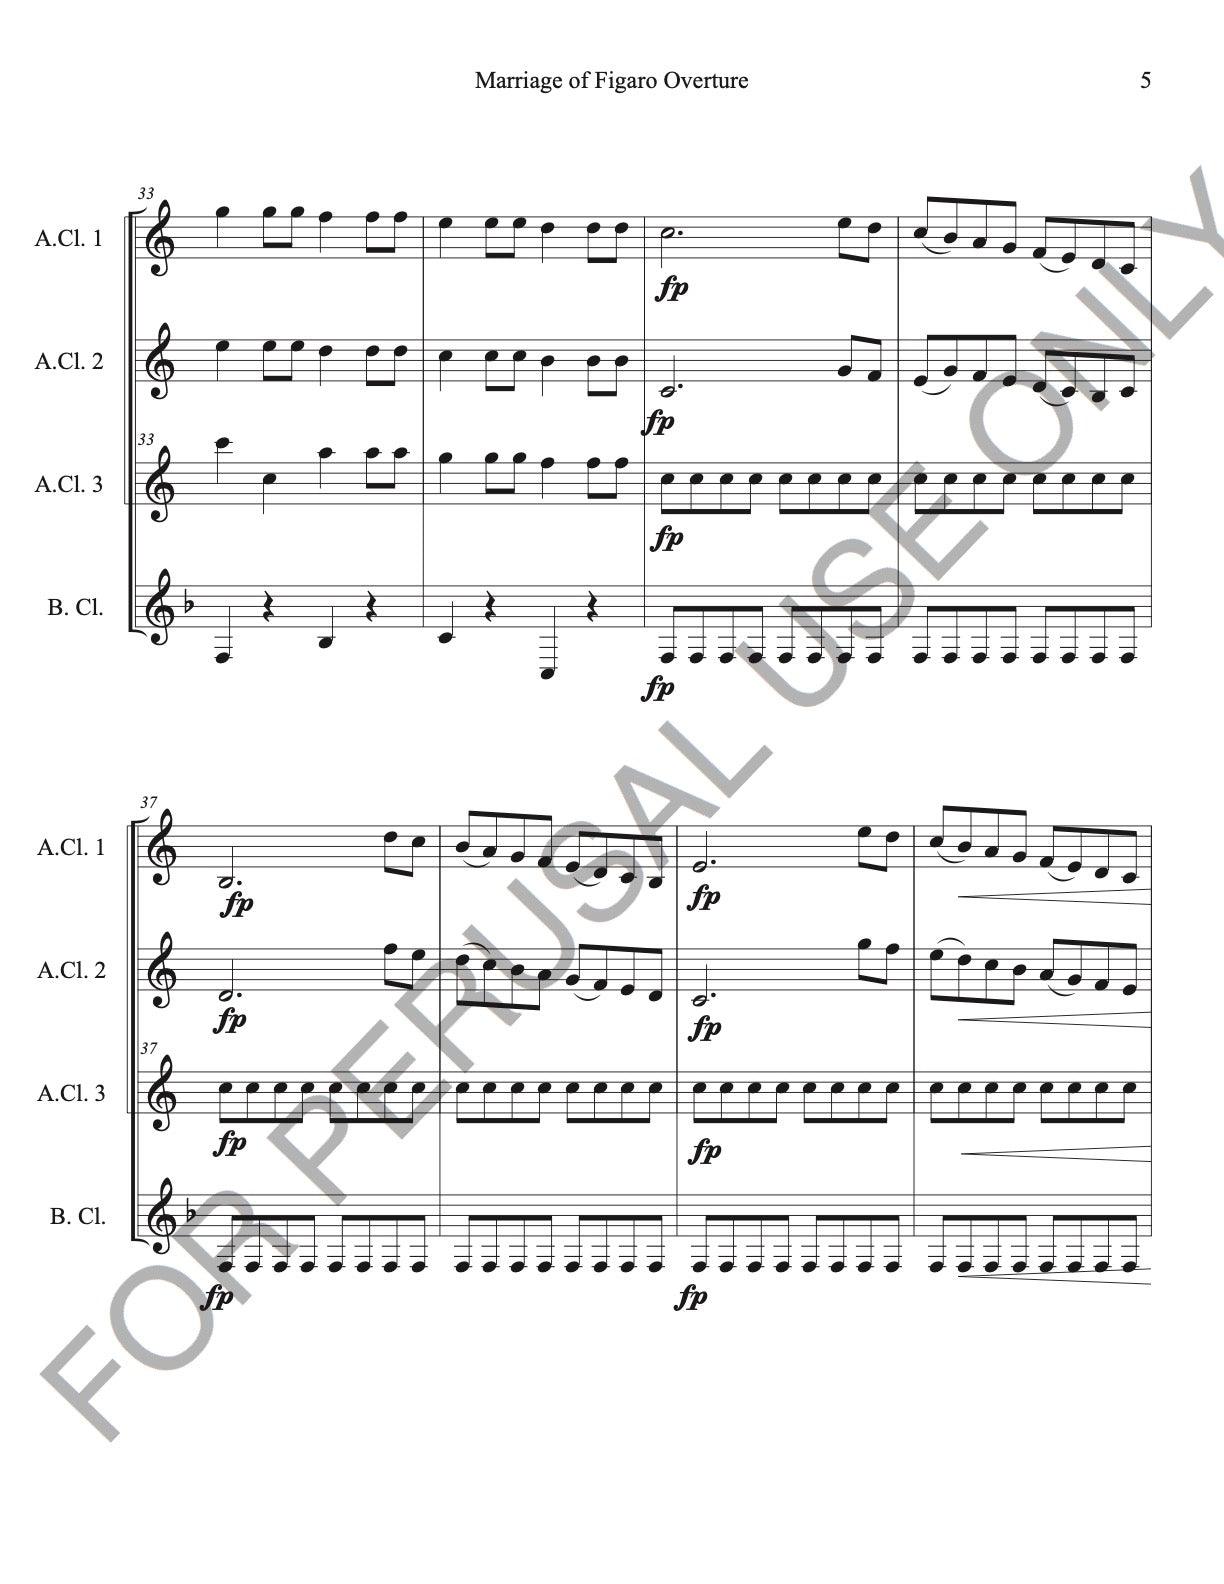 Clarinet Quartet sheet music (3 Altos+Bass)- The Marriage of Figaro Overture - ChaipruckMekara